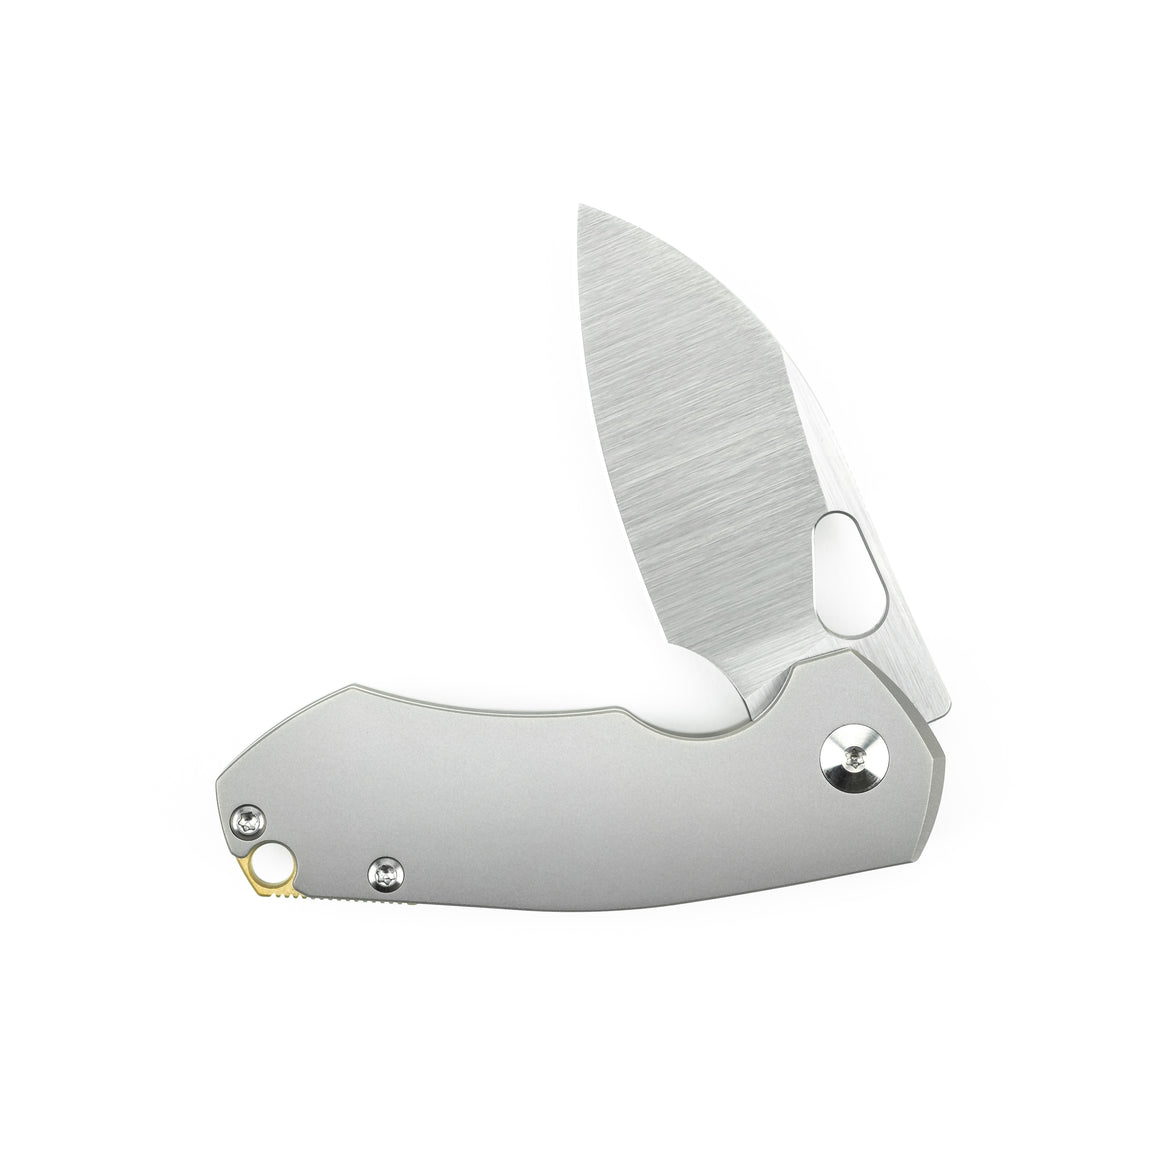 ACE Riv - Titanium - EDC knife - Steel: Elmax blade steel - Satin finish